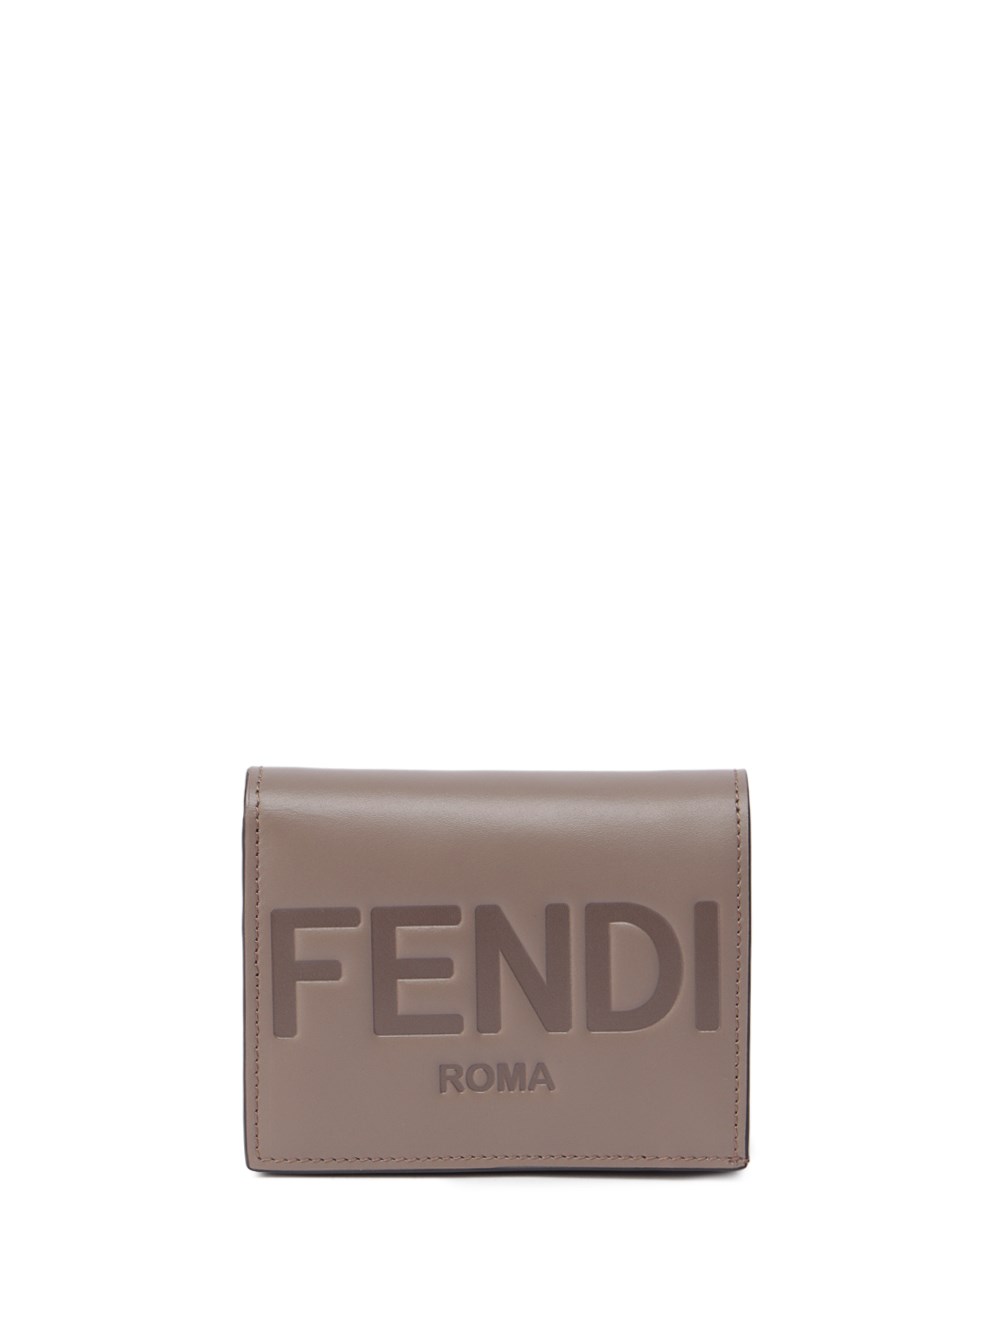 FENDI Wallets for Women | ModeSens